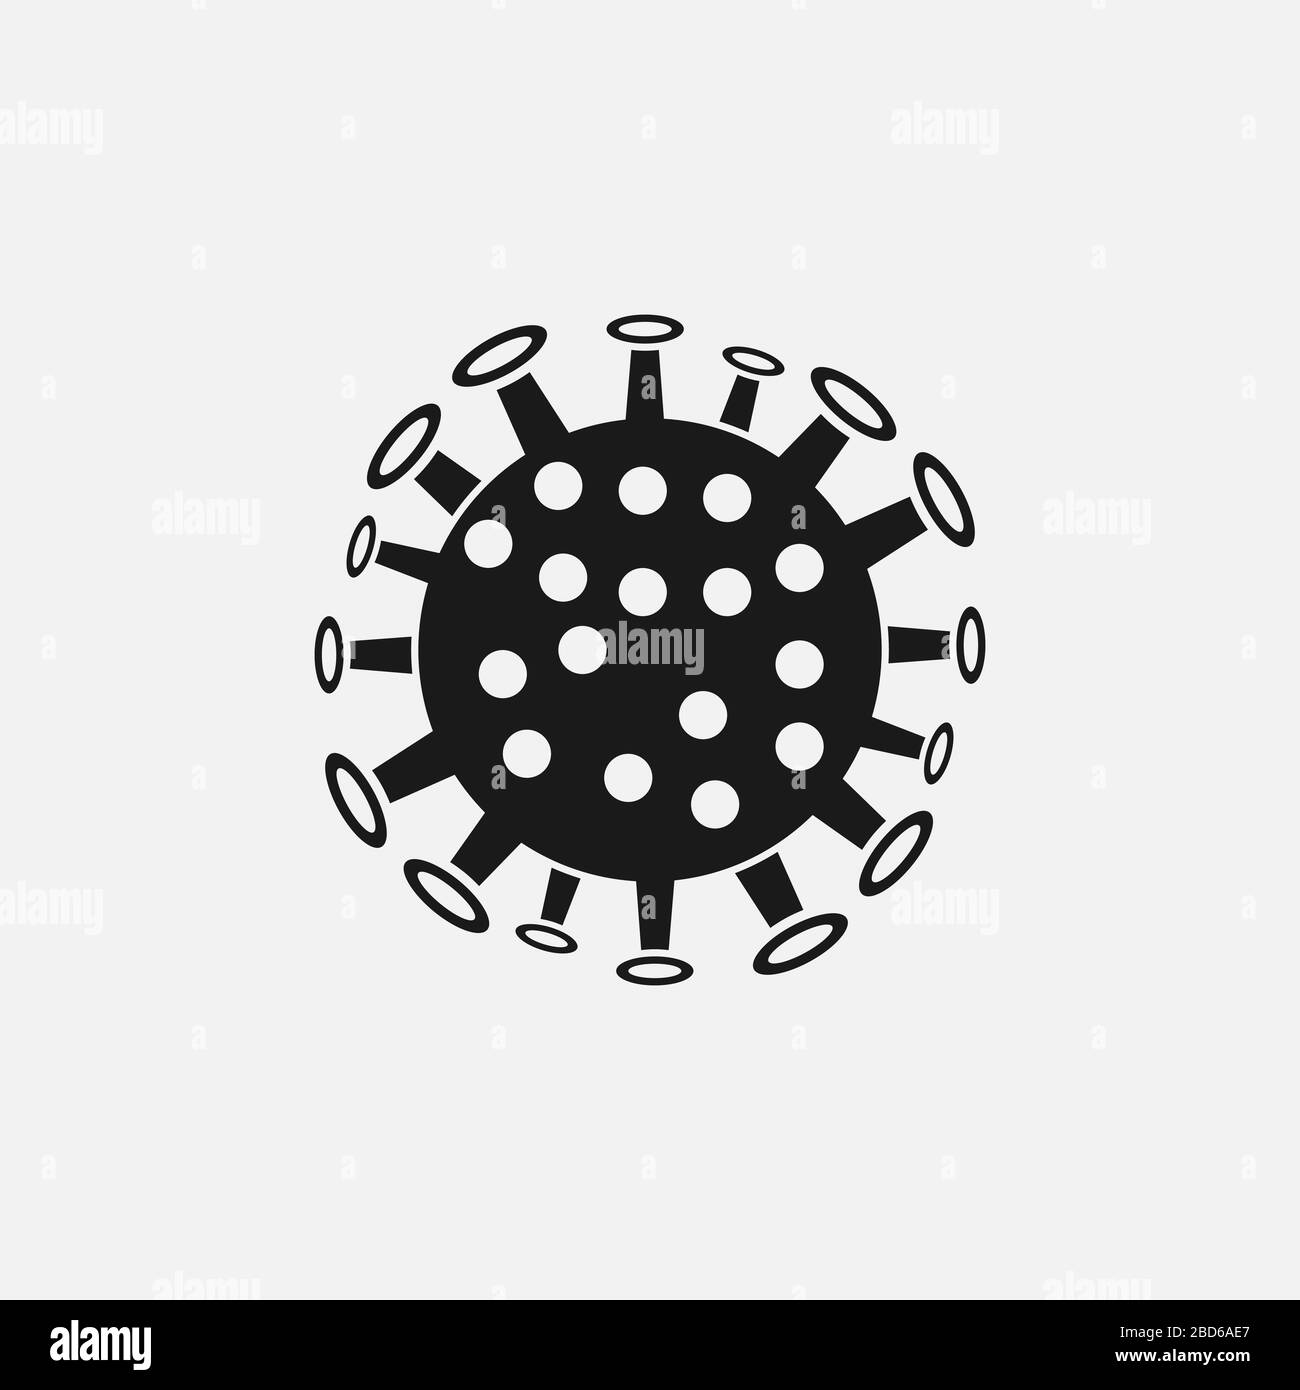 Coronavirus 2019 nCov icon. Virus and epidemic, bacterium, microbiology, pandemic symbol. Flat design. Stock - Vector illustration. Stock Vector